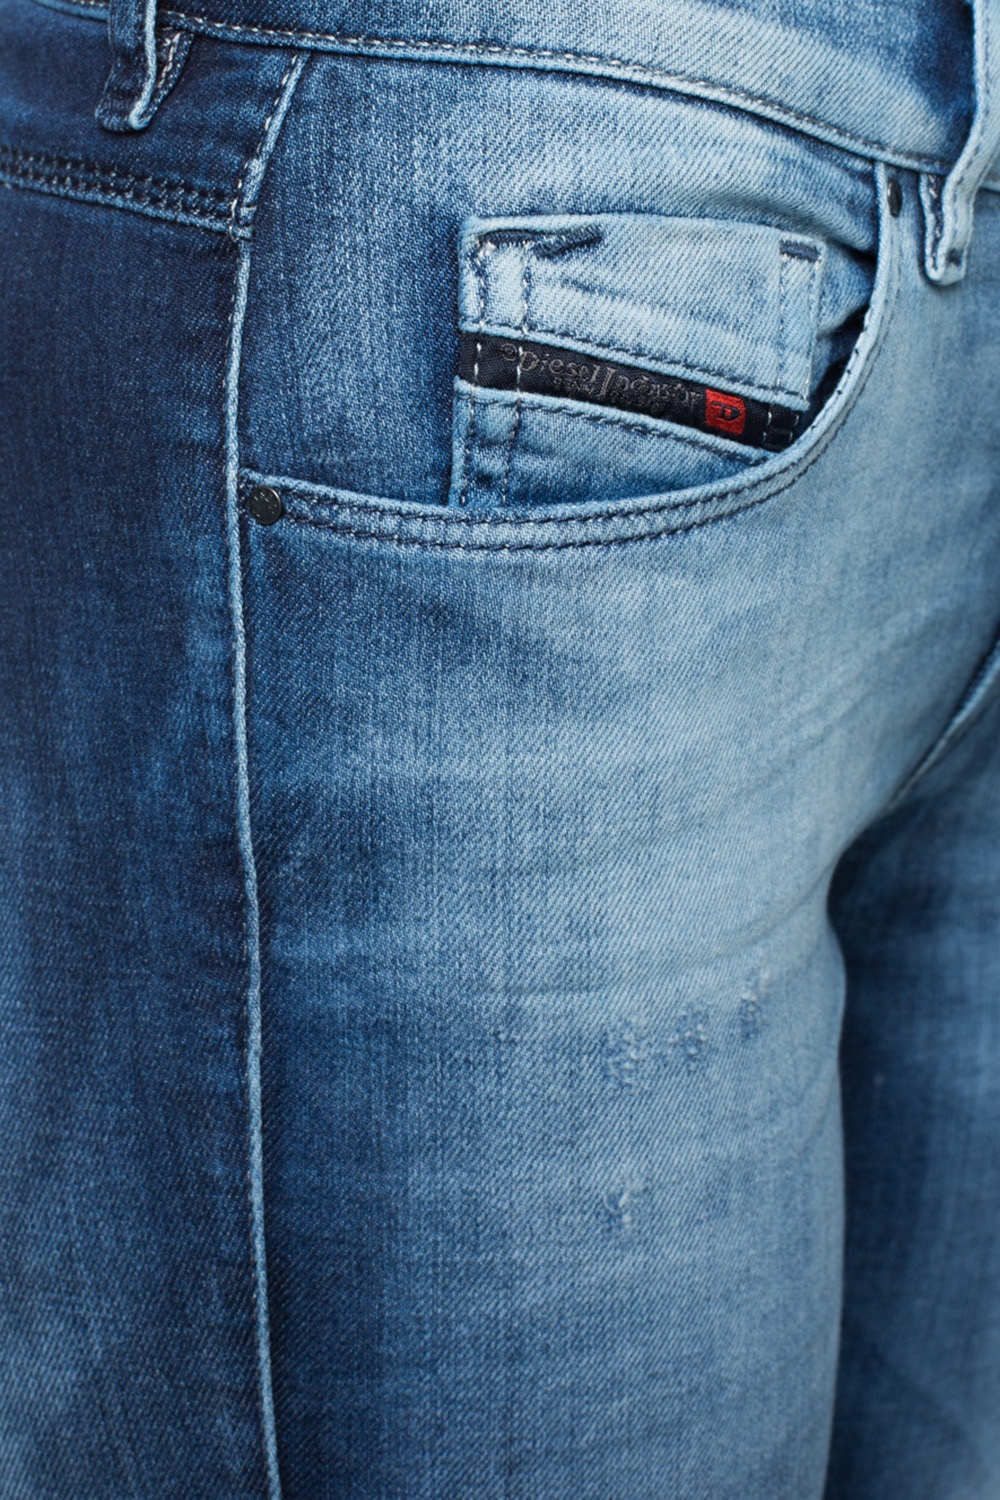 Diesel 'Sandy' jeans | Women's Clothing | Vitkac